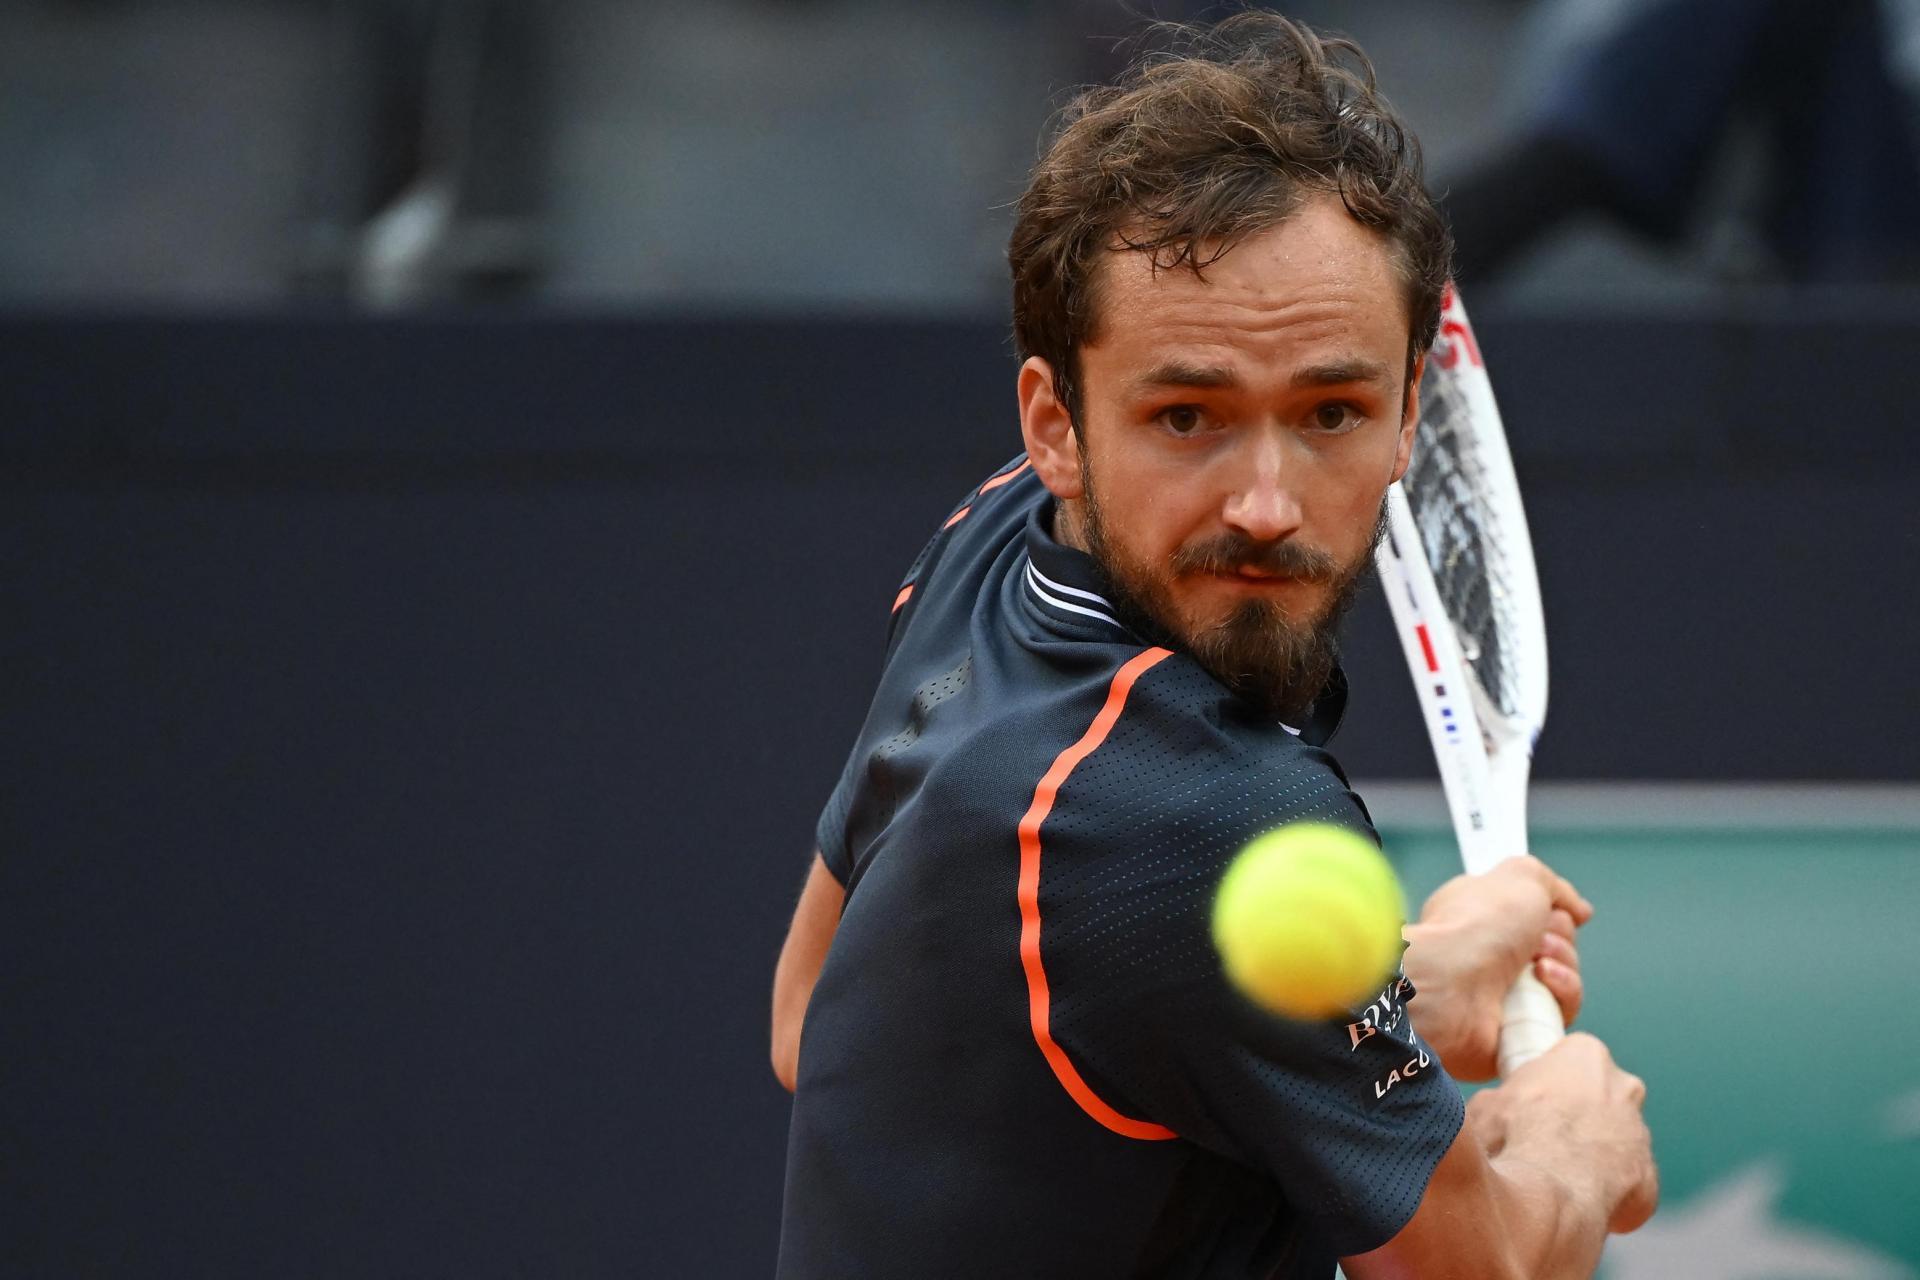 Daniil Medvedev lists Italian Open triumph among top career